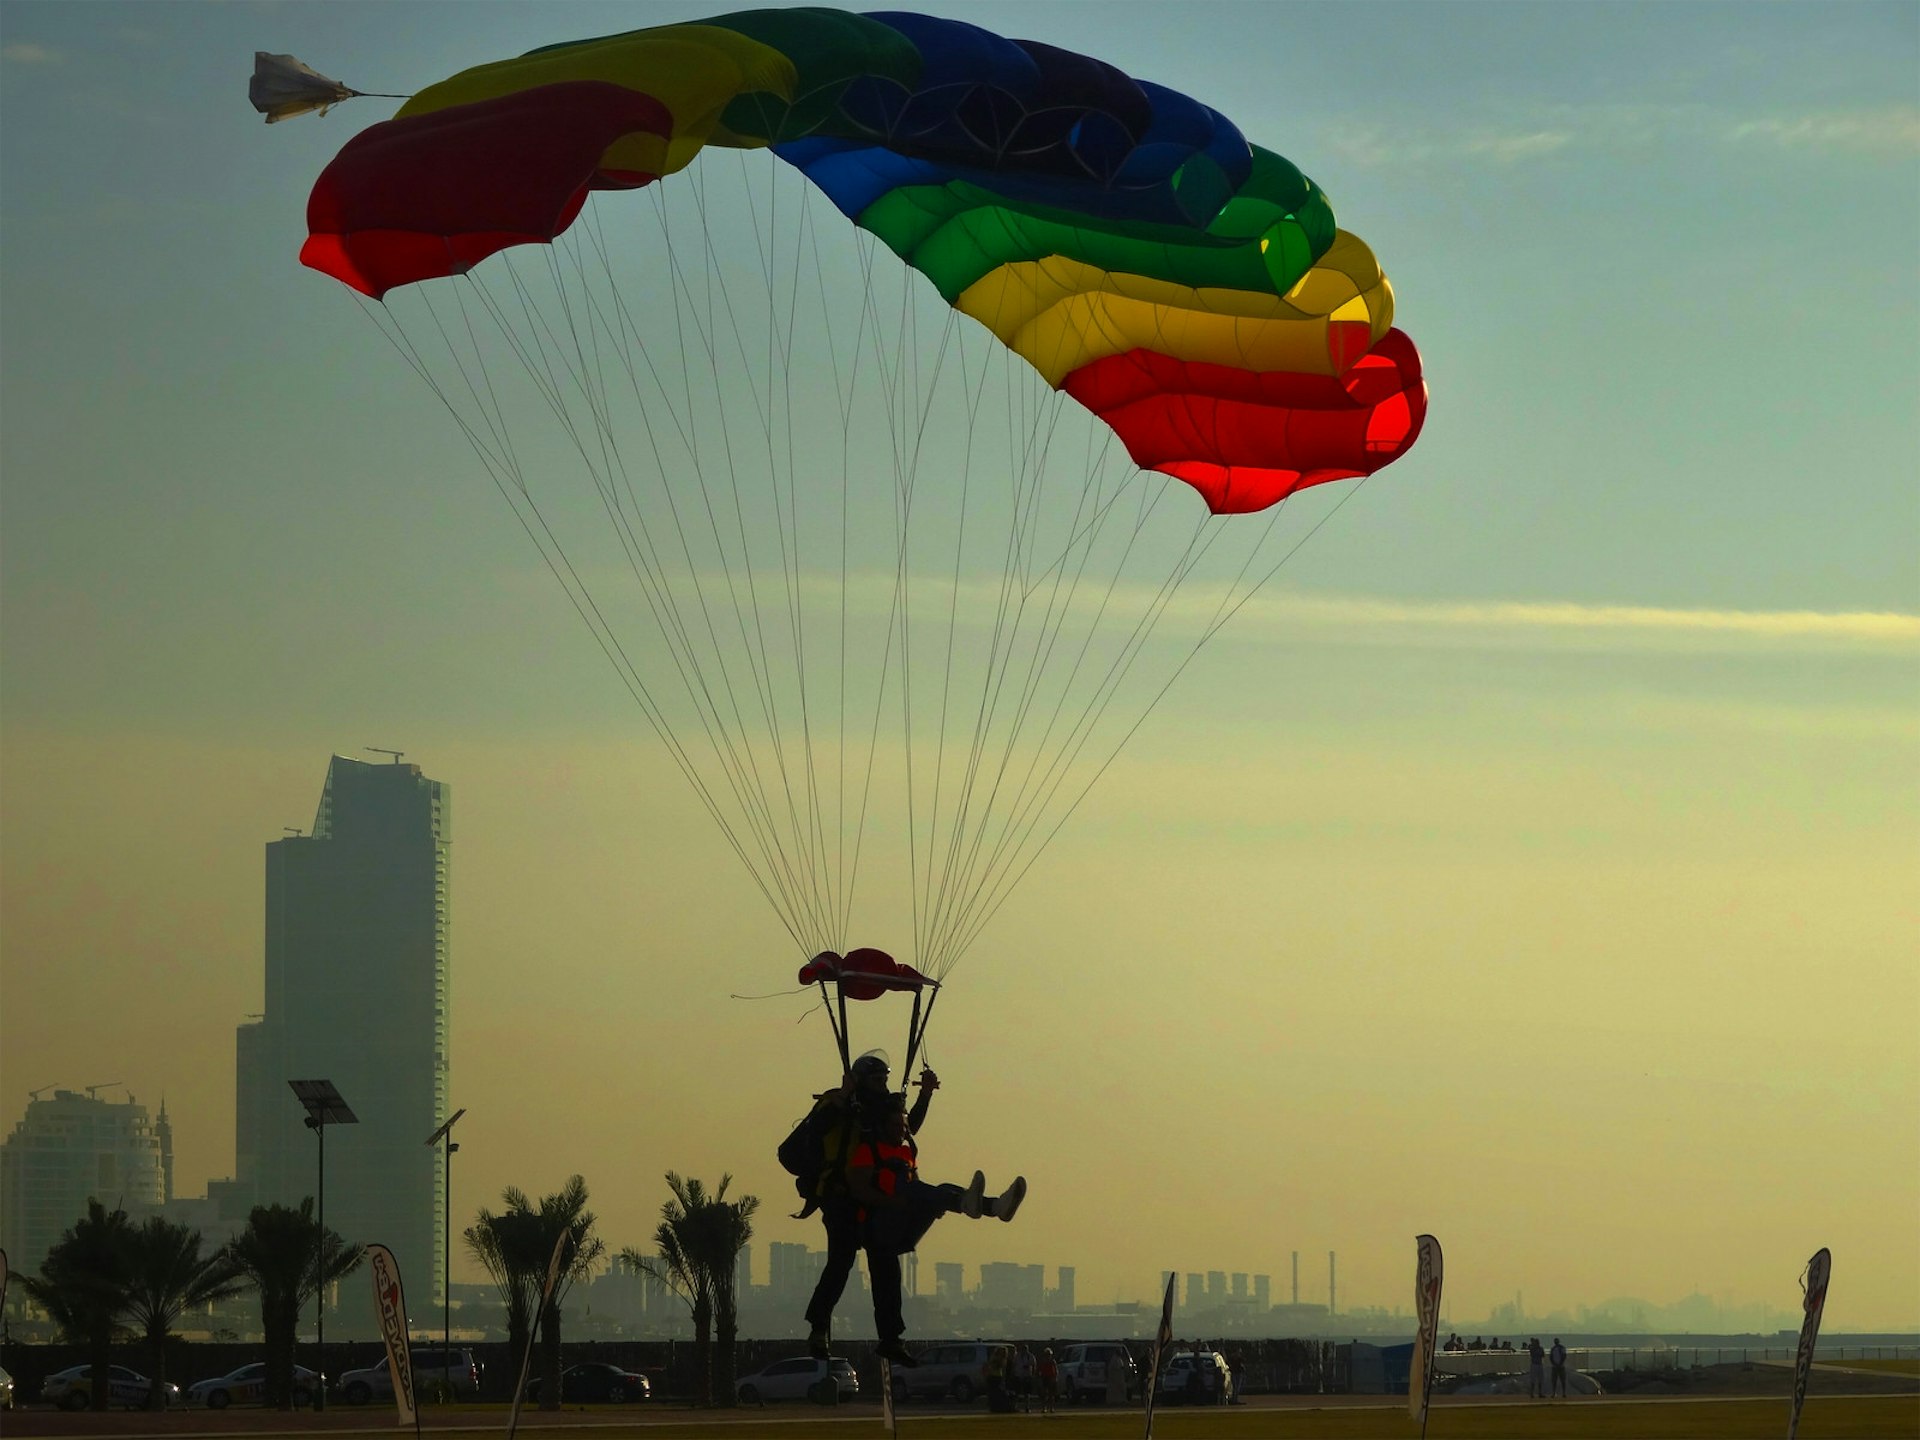 Skydiving in Dubai. Image by Rada Daisy / Shutterstock